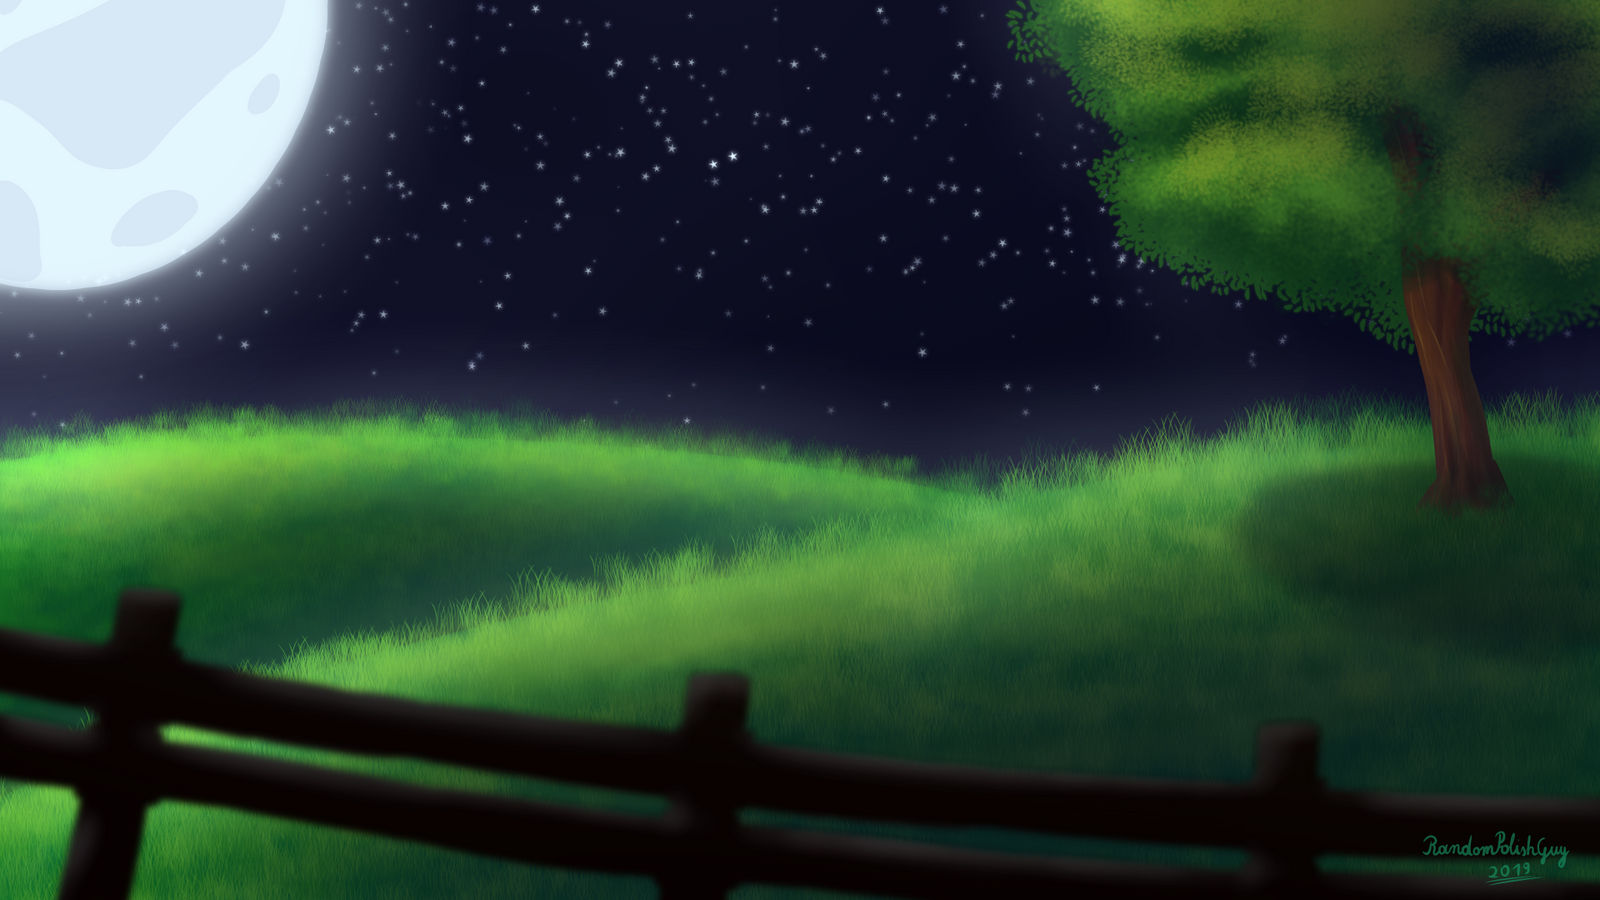 The Night - Anime Background by RandomPolishGuy on DeviantArt